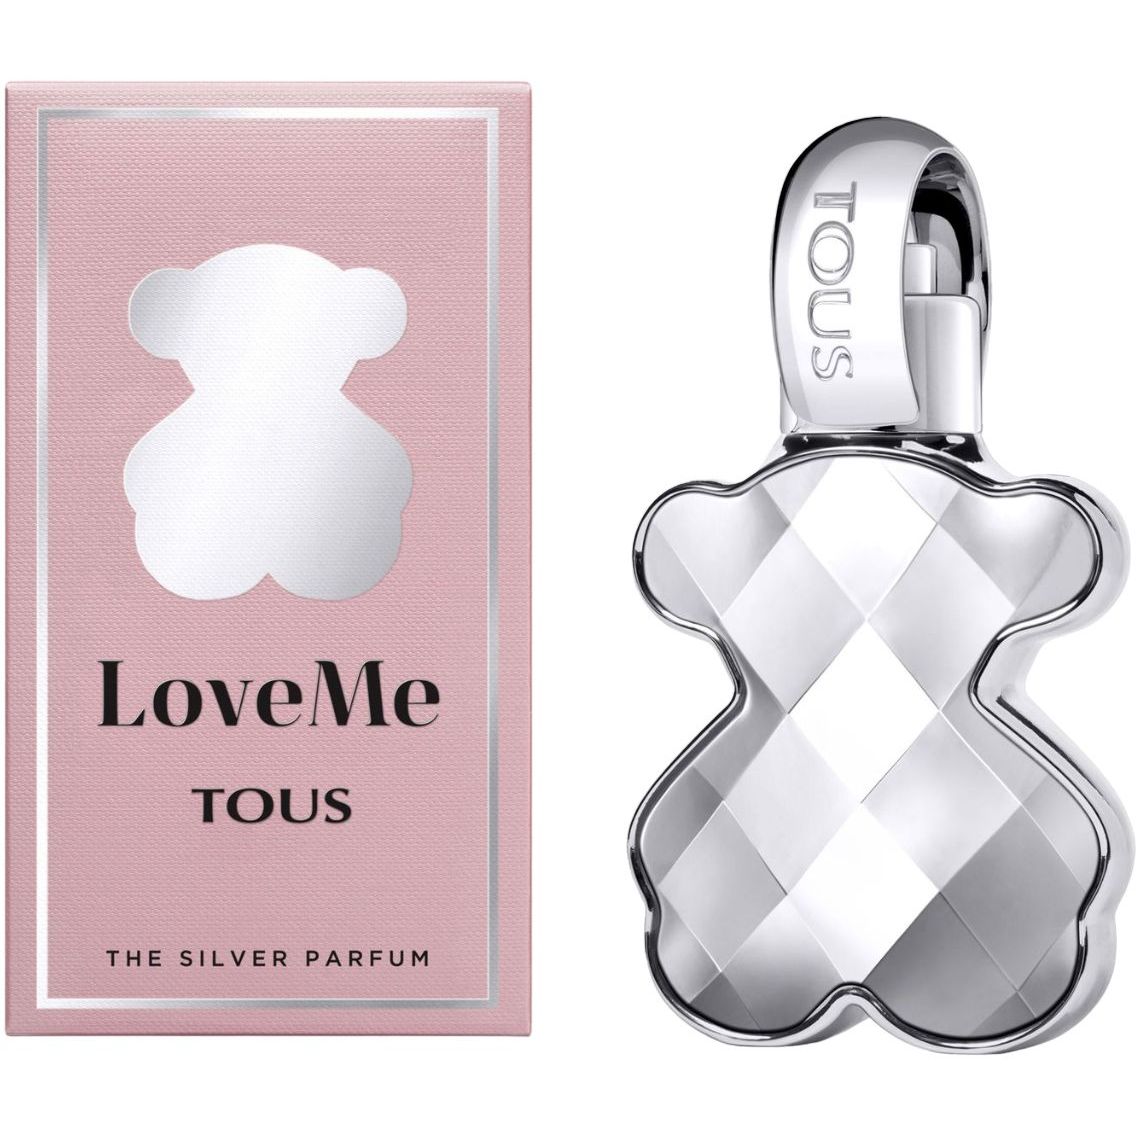 Парфюмированная вода для женщин Tous LoveMe The Silver Parfum, 15 мл - фото 1